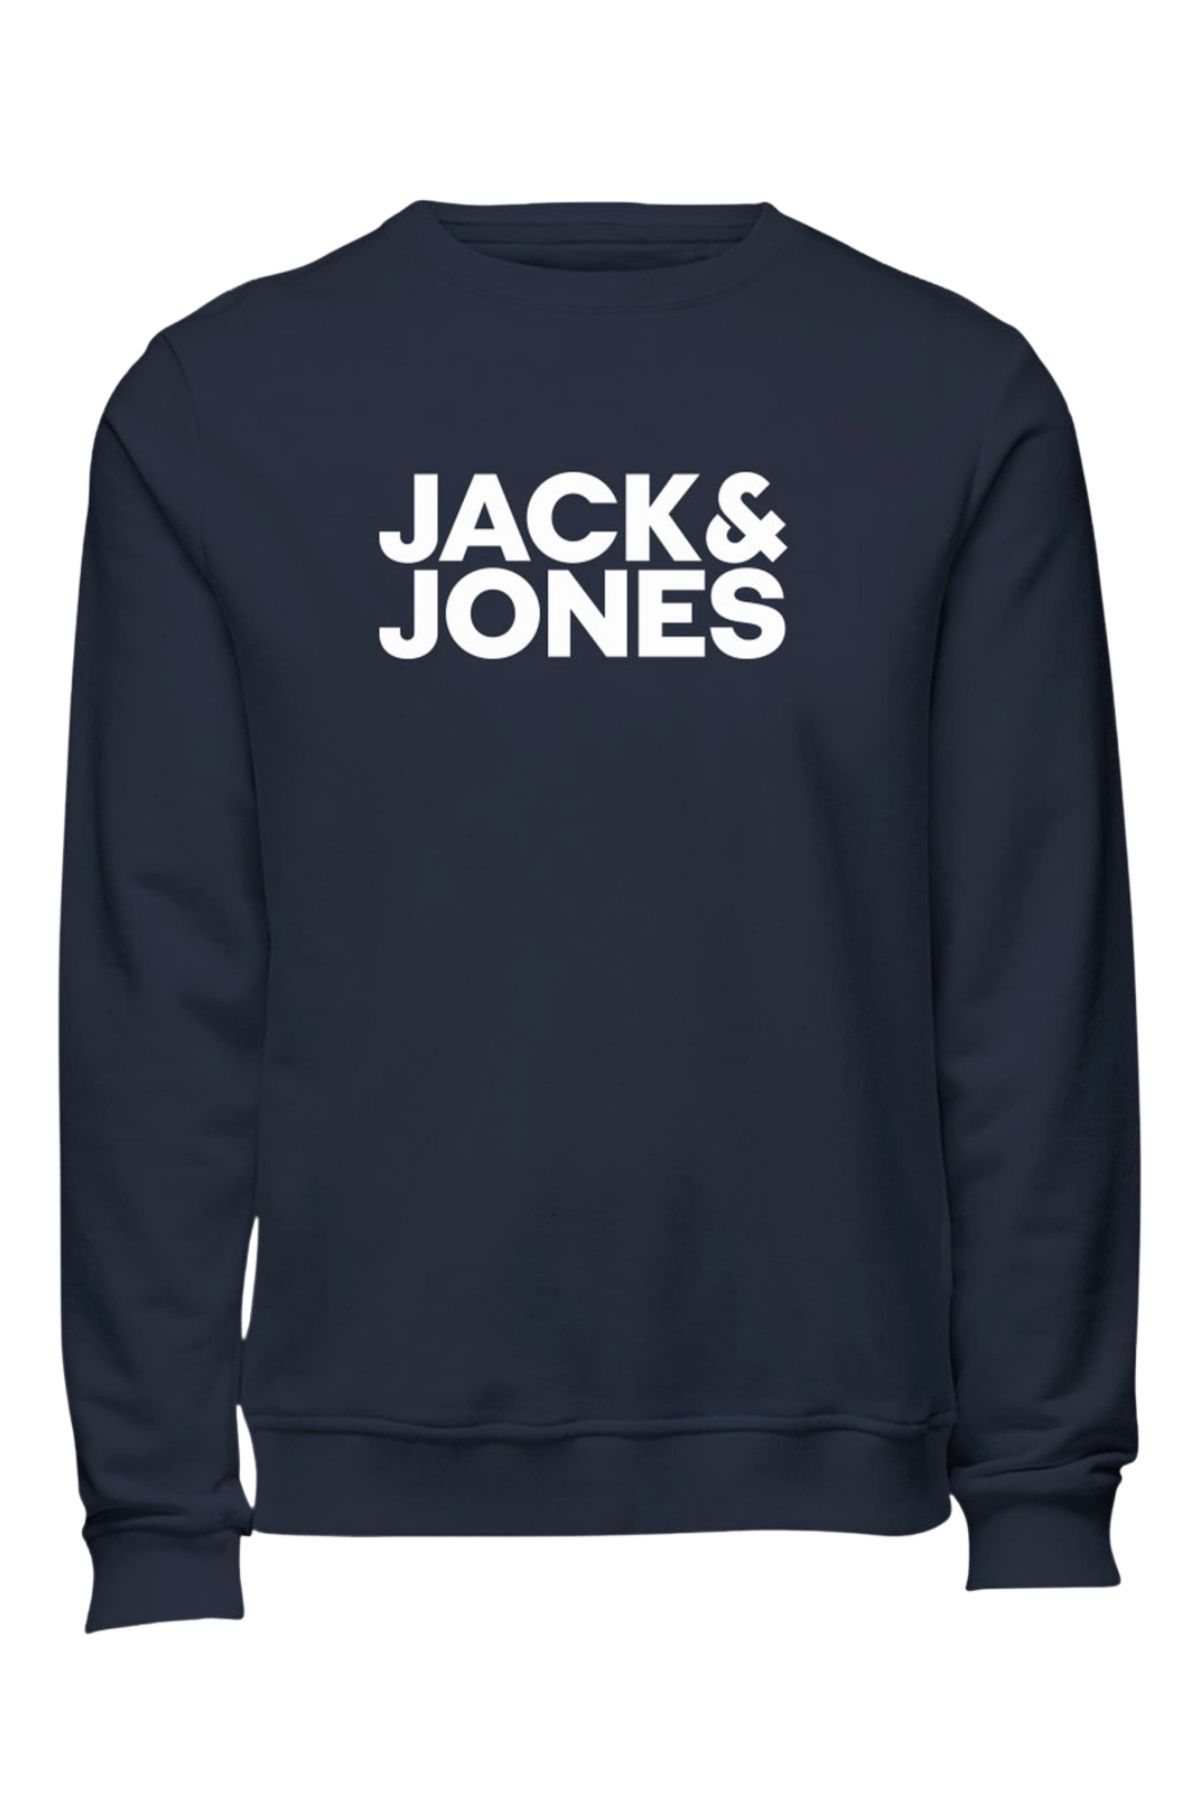 Jack & Jones Erkek Lacivert Sweatshirt 12190578-lacivert